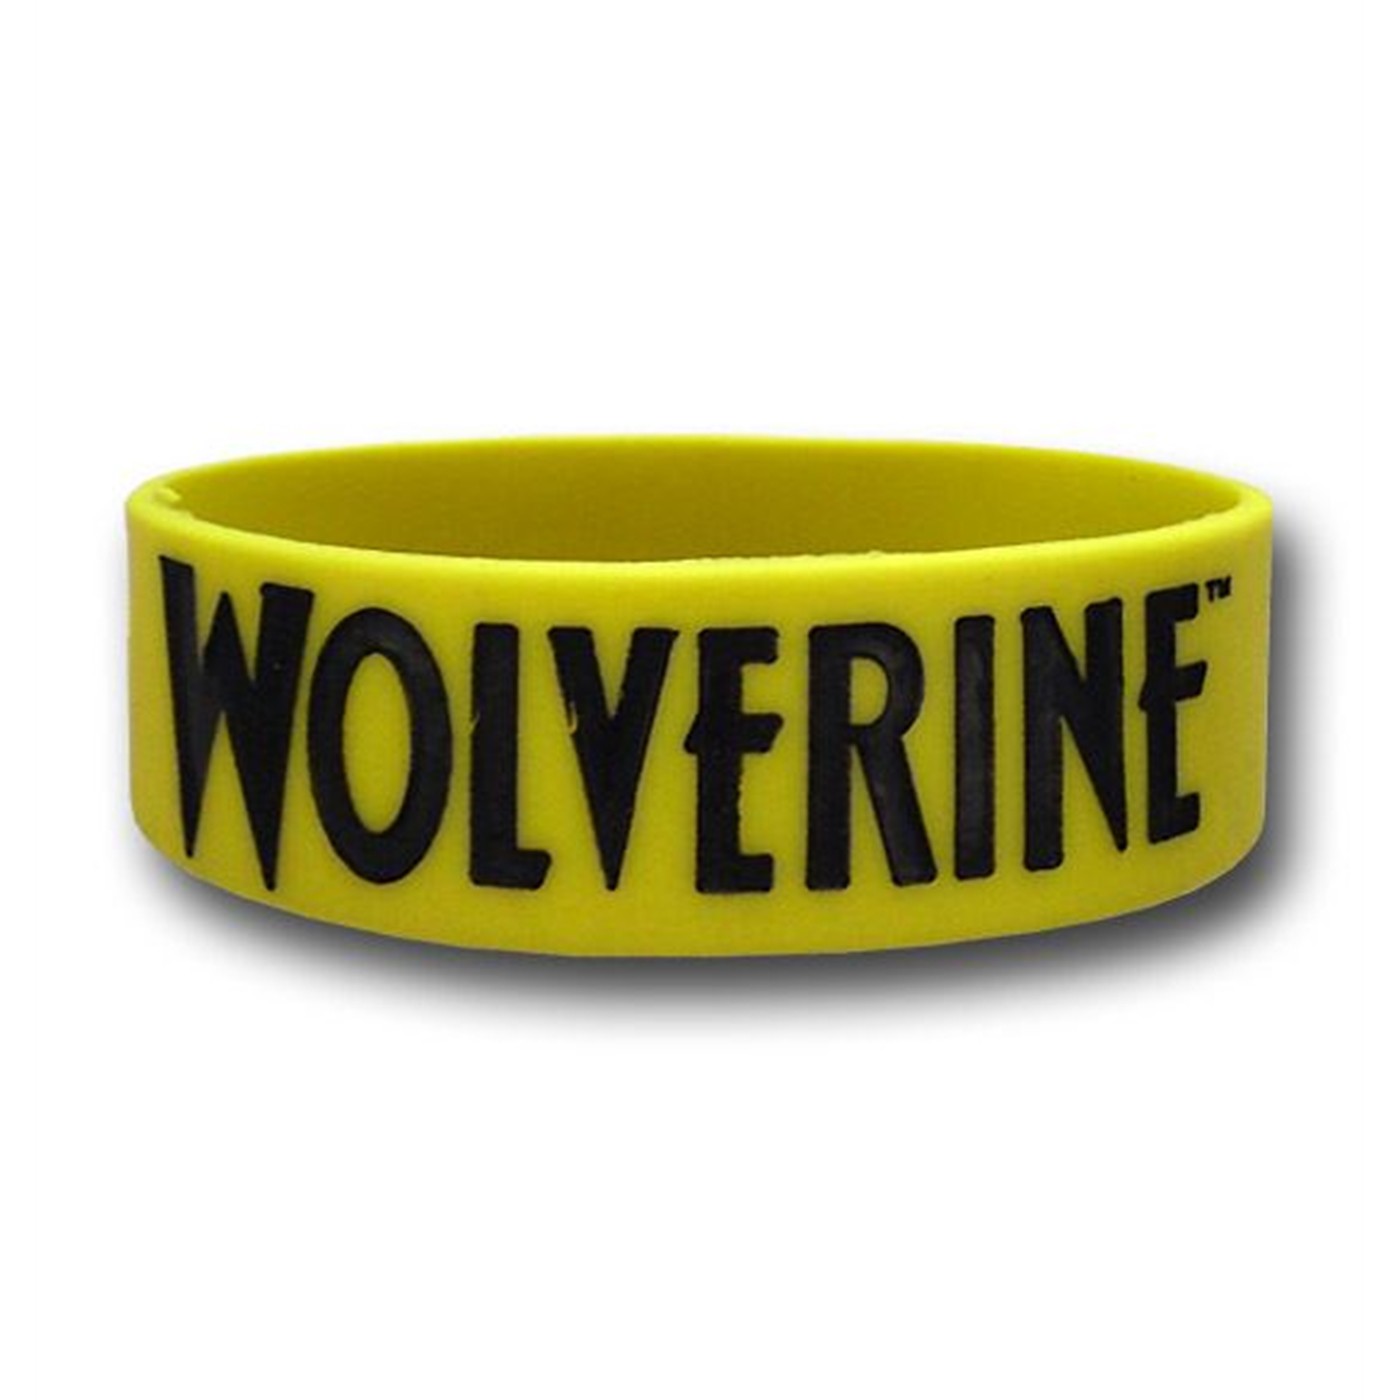 Wolverine Rubber Wristband